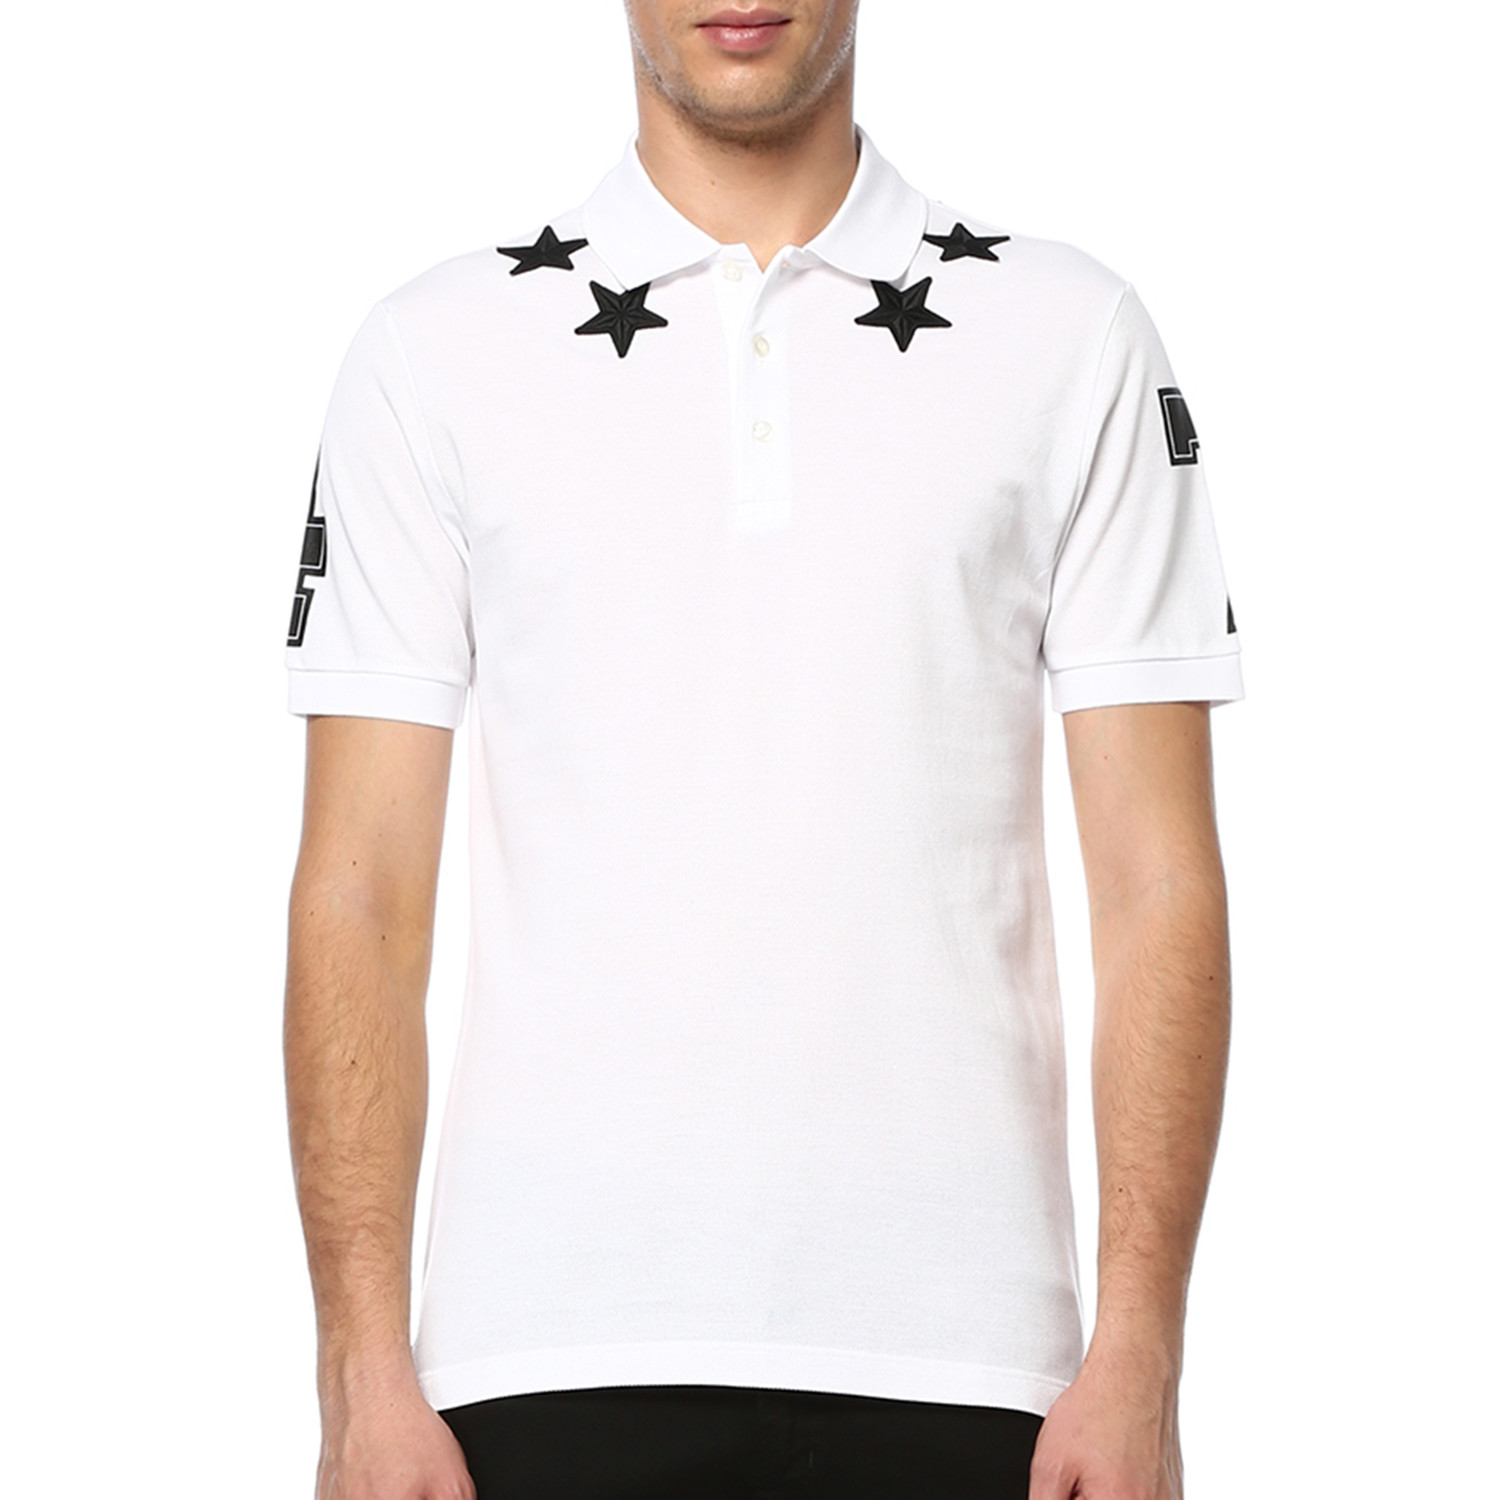 polo shirt with stars on collar